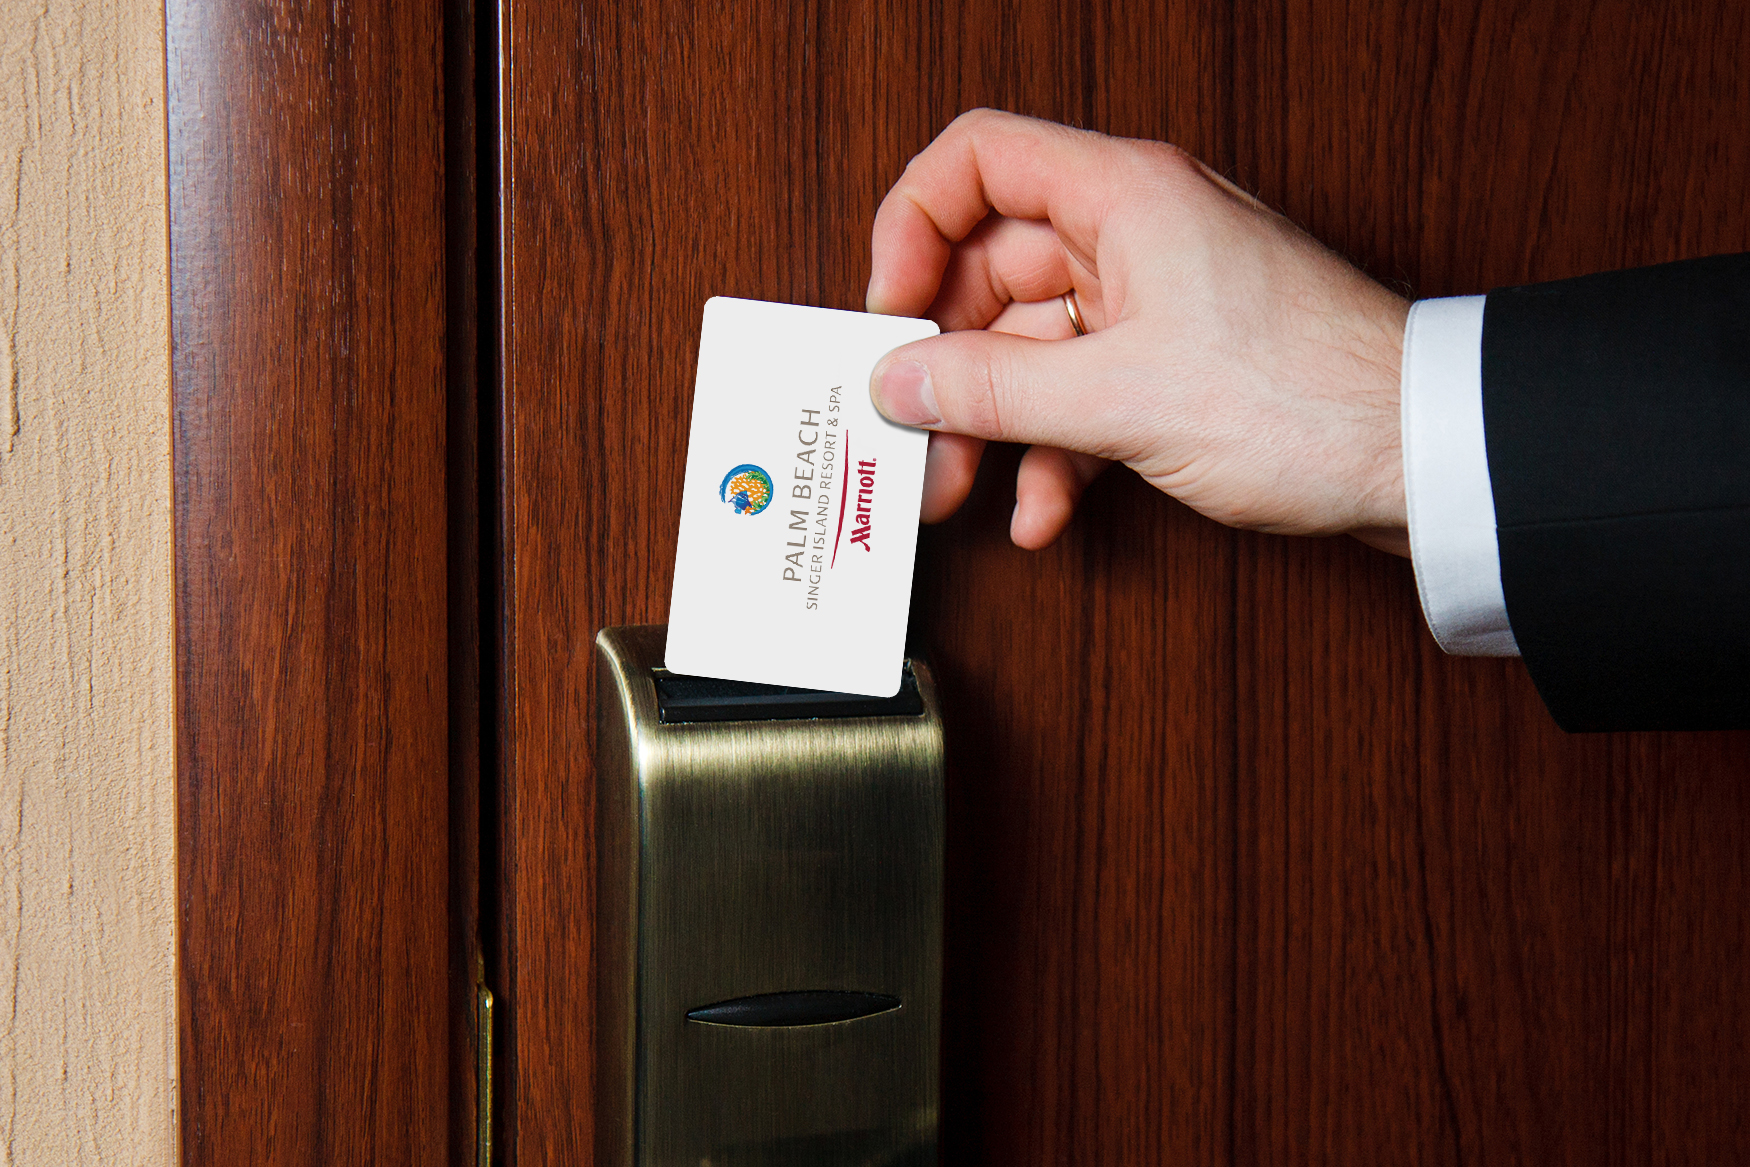 room key card system